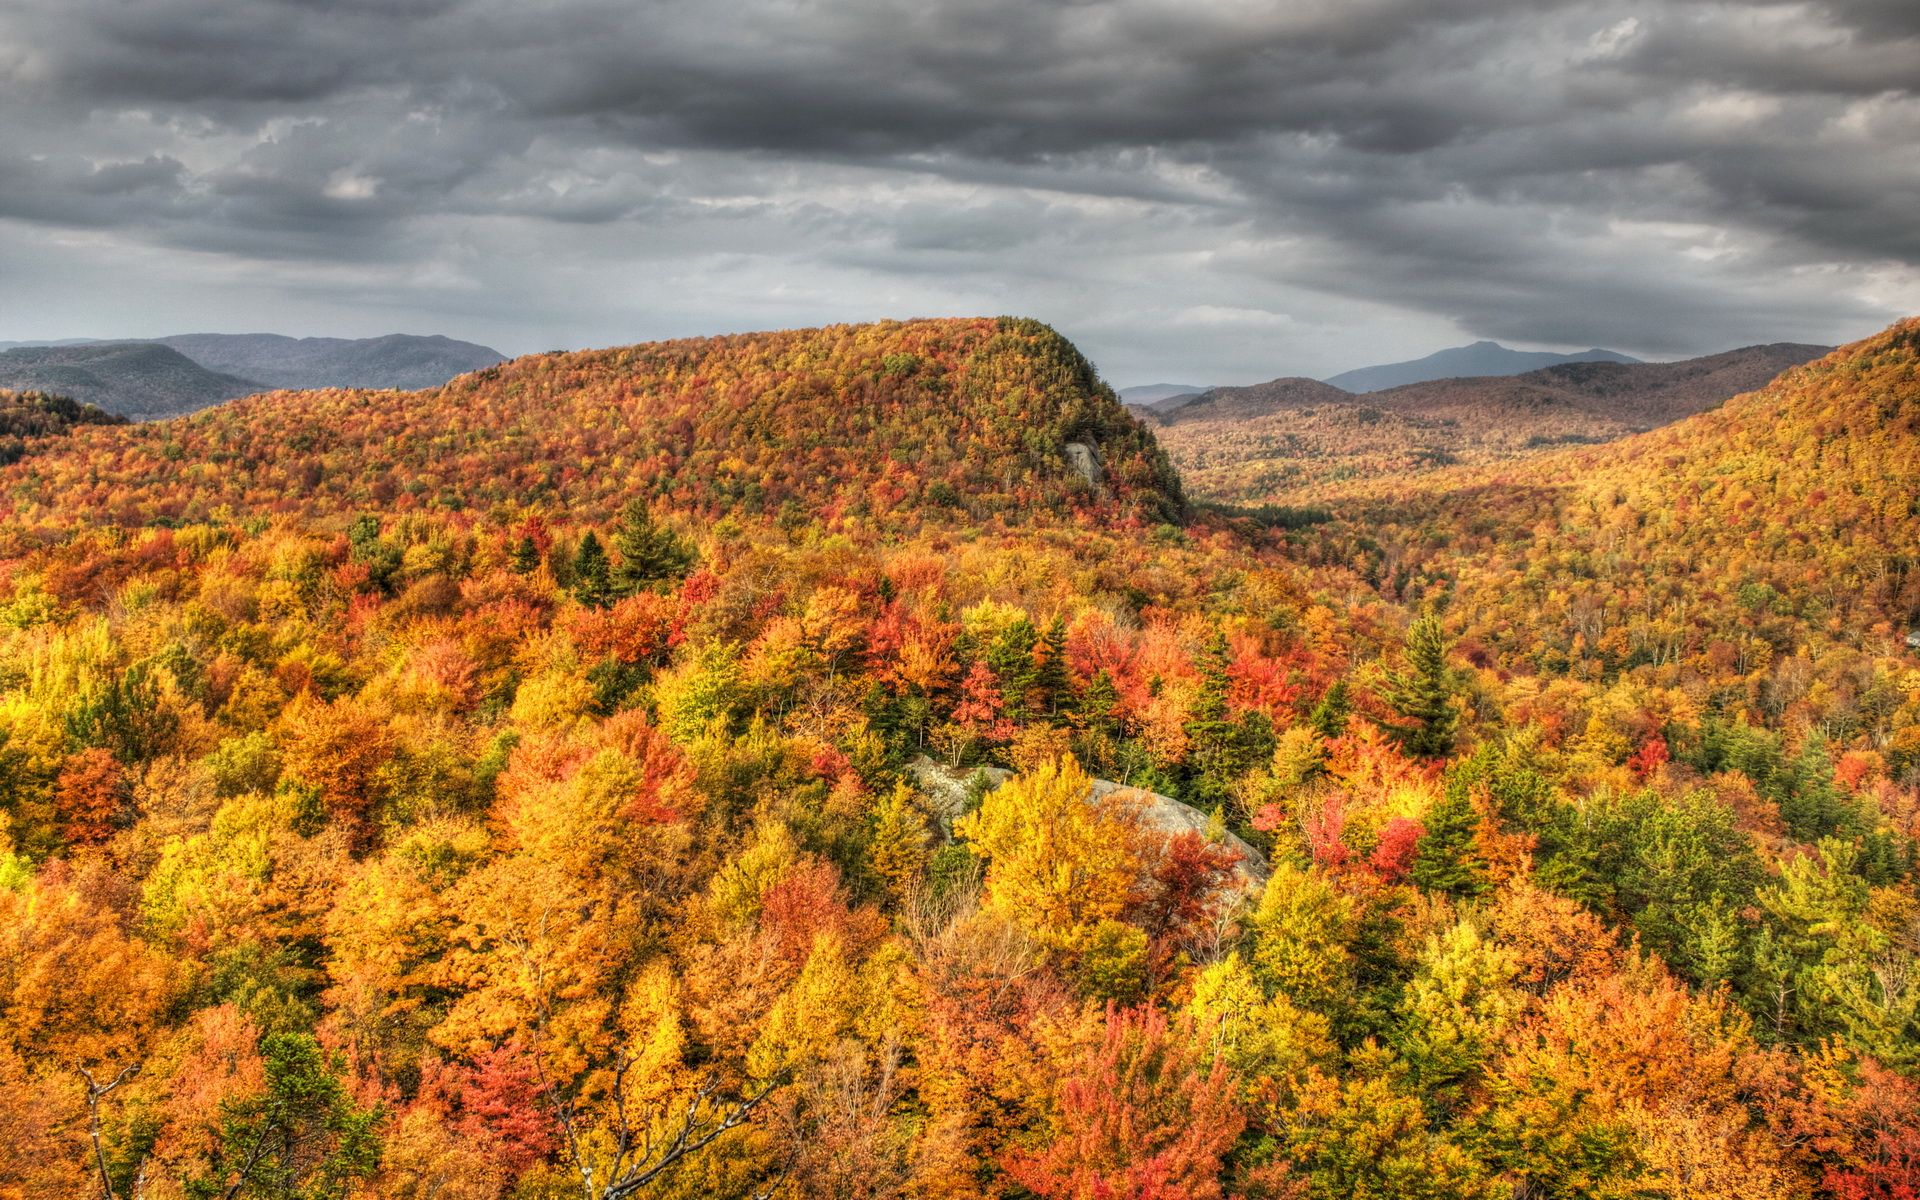  Faszinierende Hintergrundbild 1920x1200. Faszinierende Herbst Hügel Hintergrundbilder. Faszinierende Herbst Hügel Frei Fotos